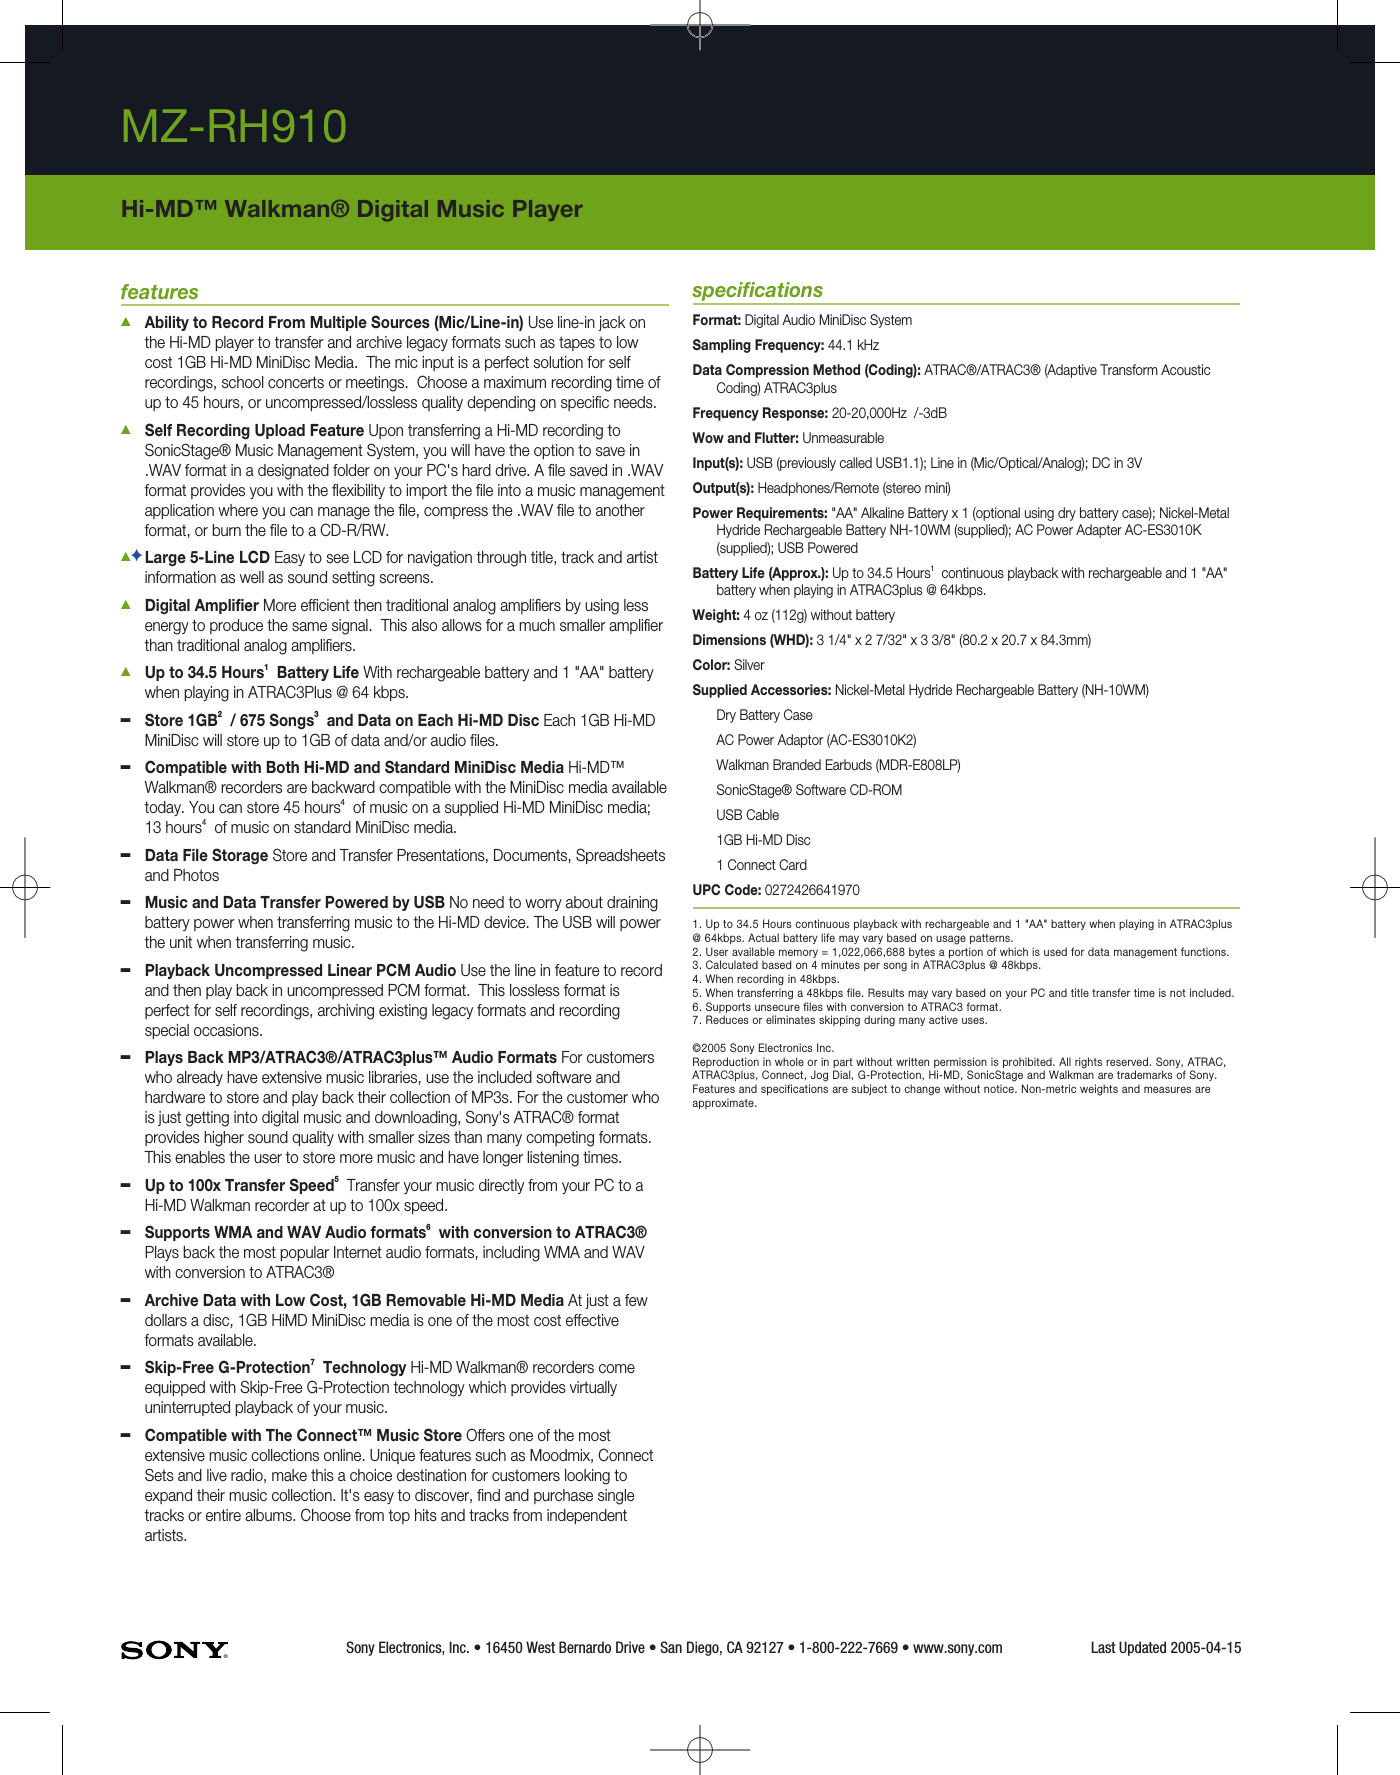 Page 2 of 2 - Sony MZ-RH910 User Manual Marketing Specifications MZRH910 Mksp